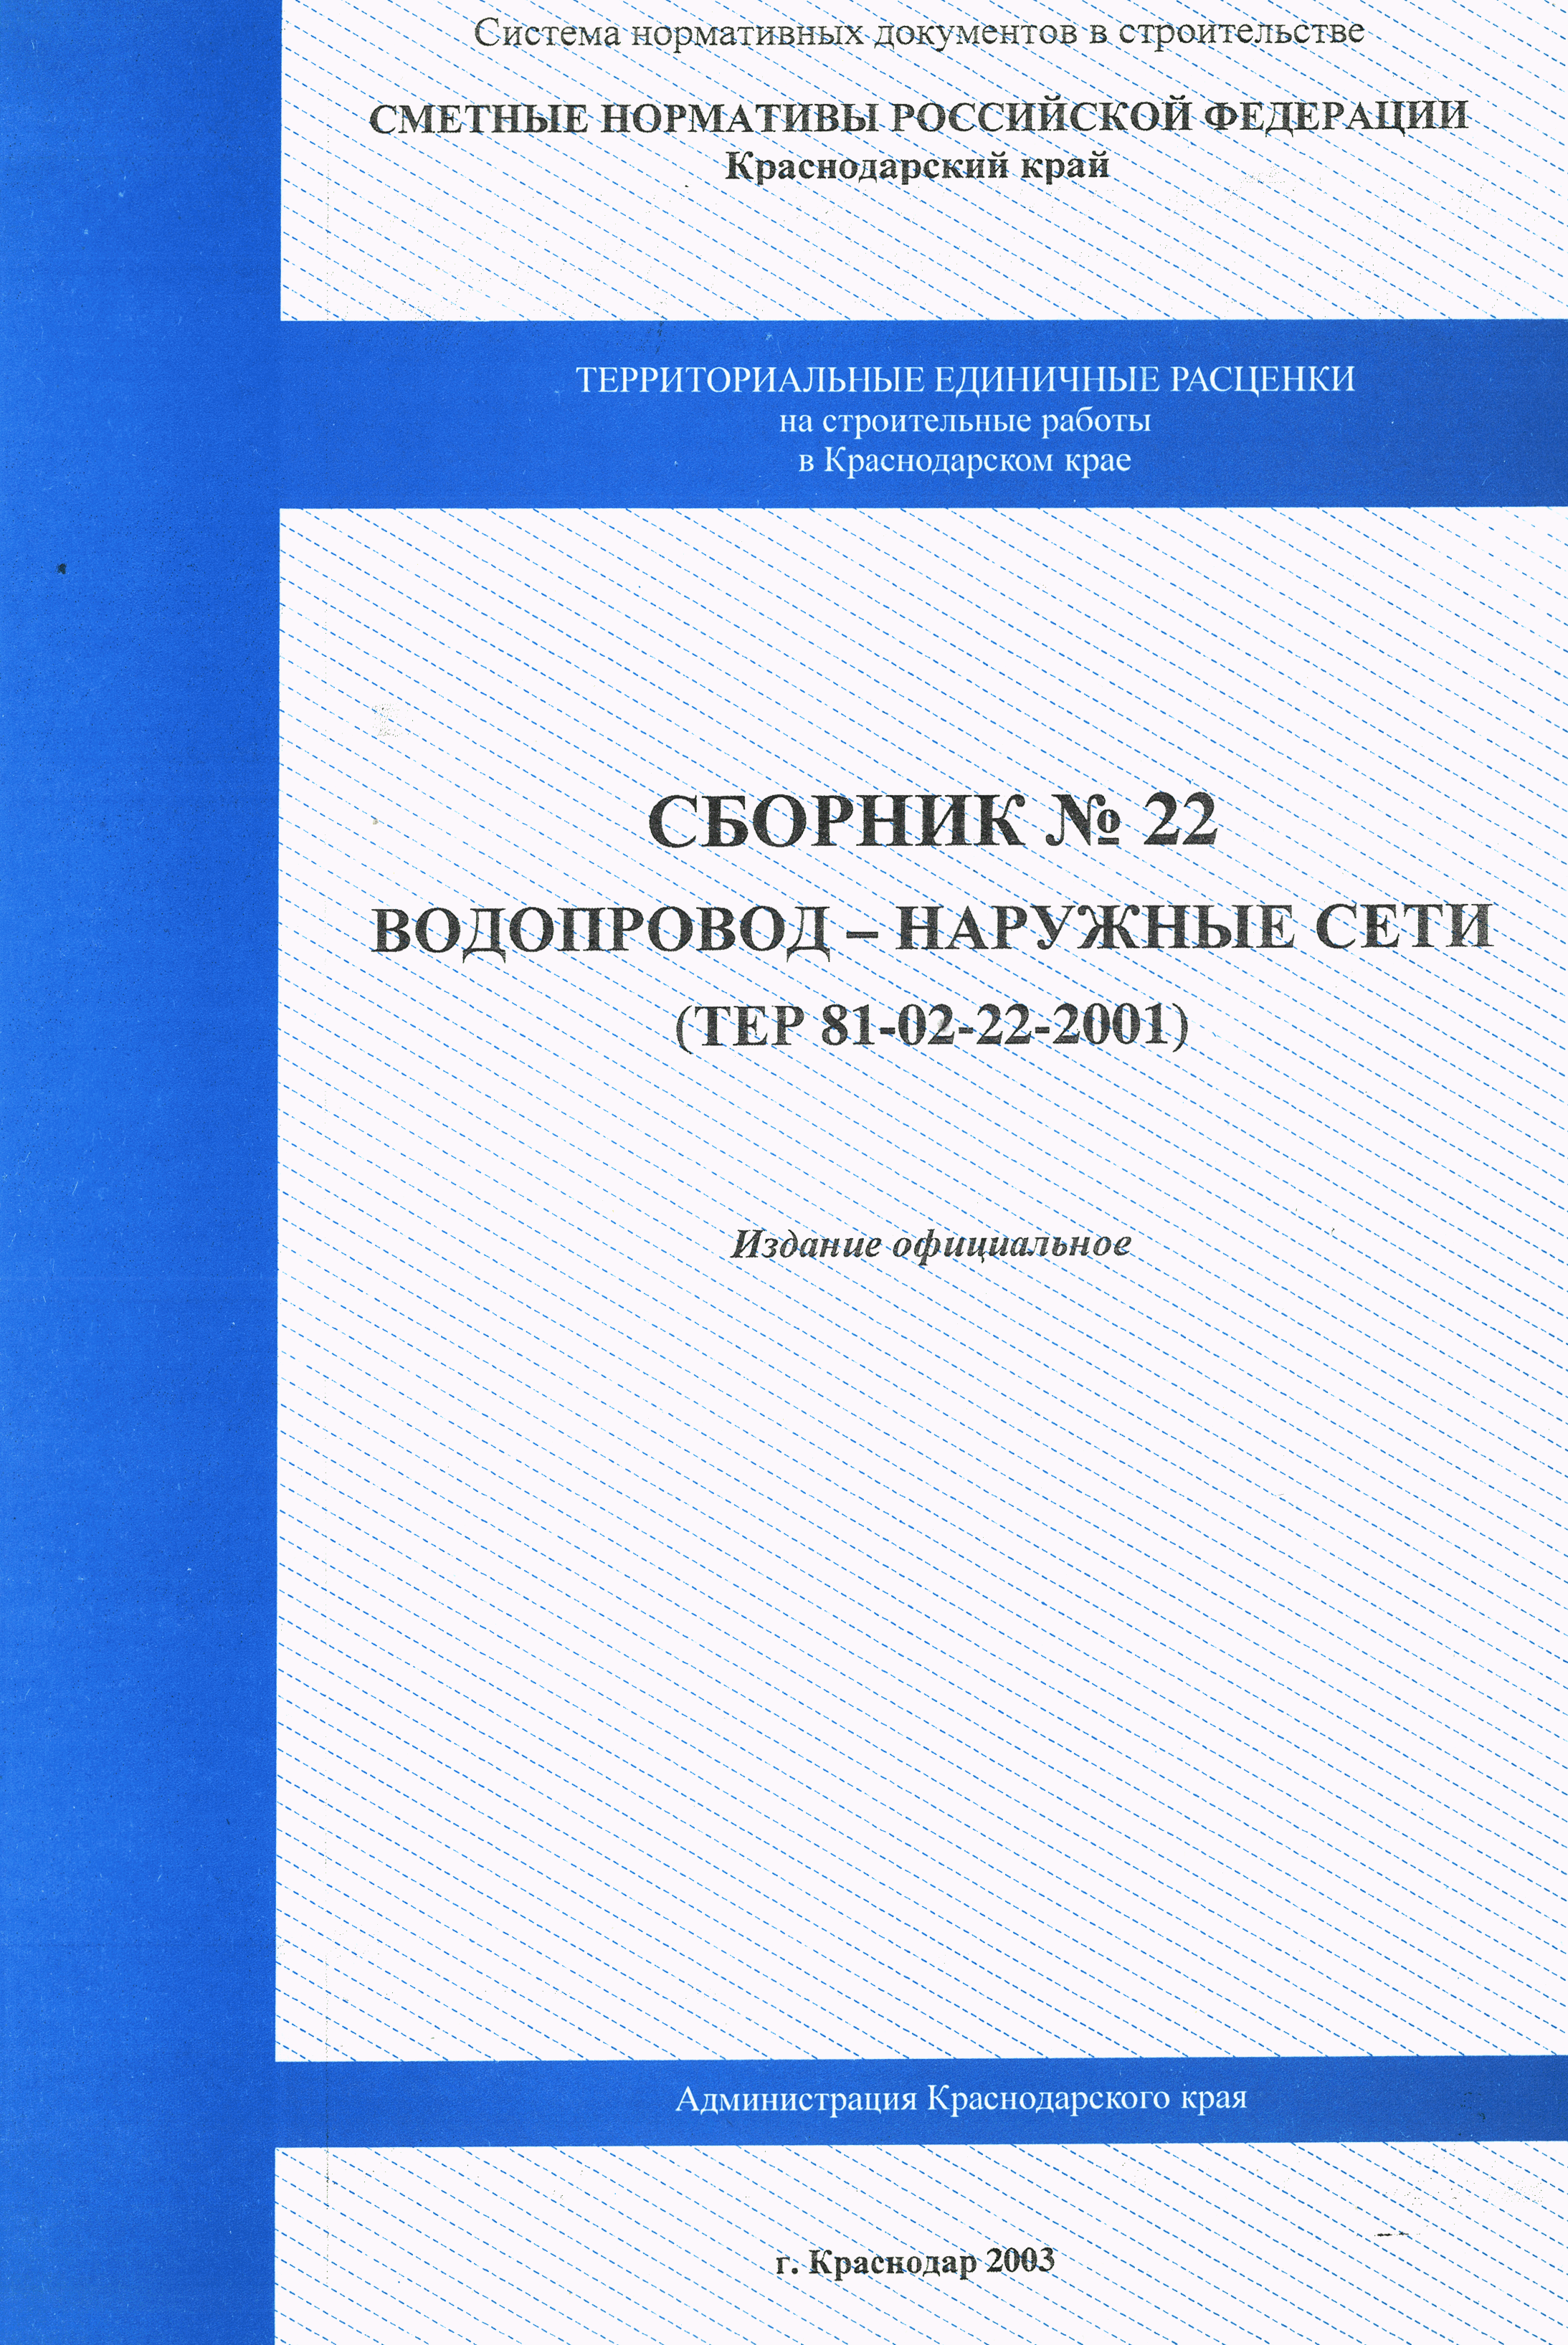 ТЕР Краснодарского края 2001-22